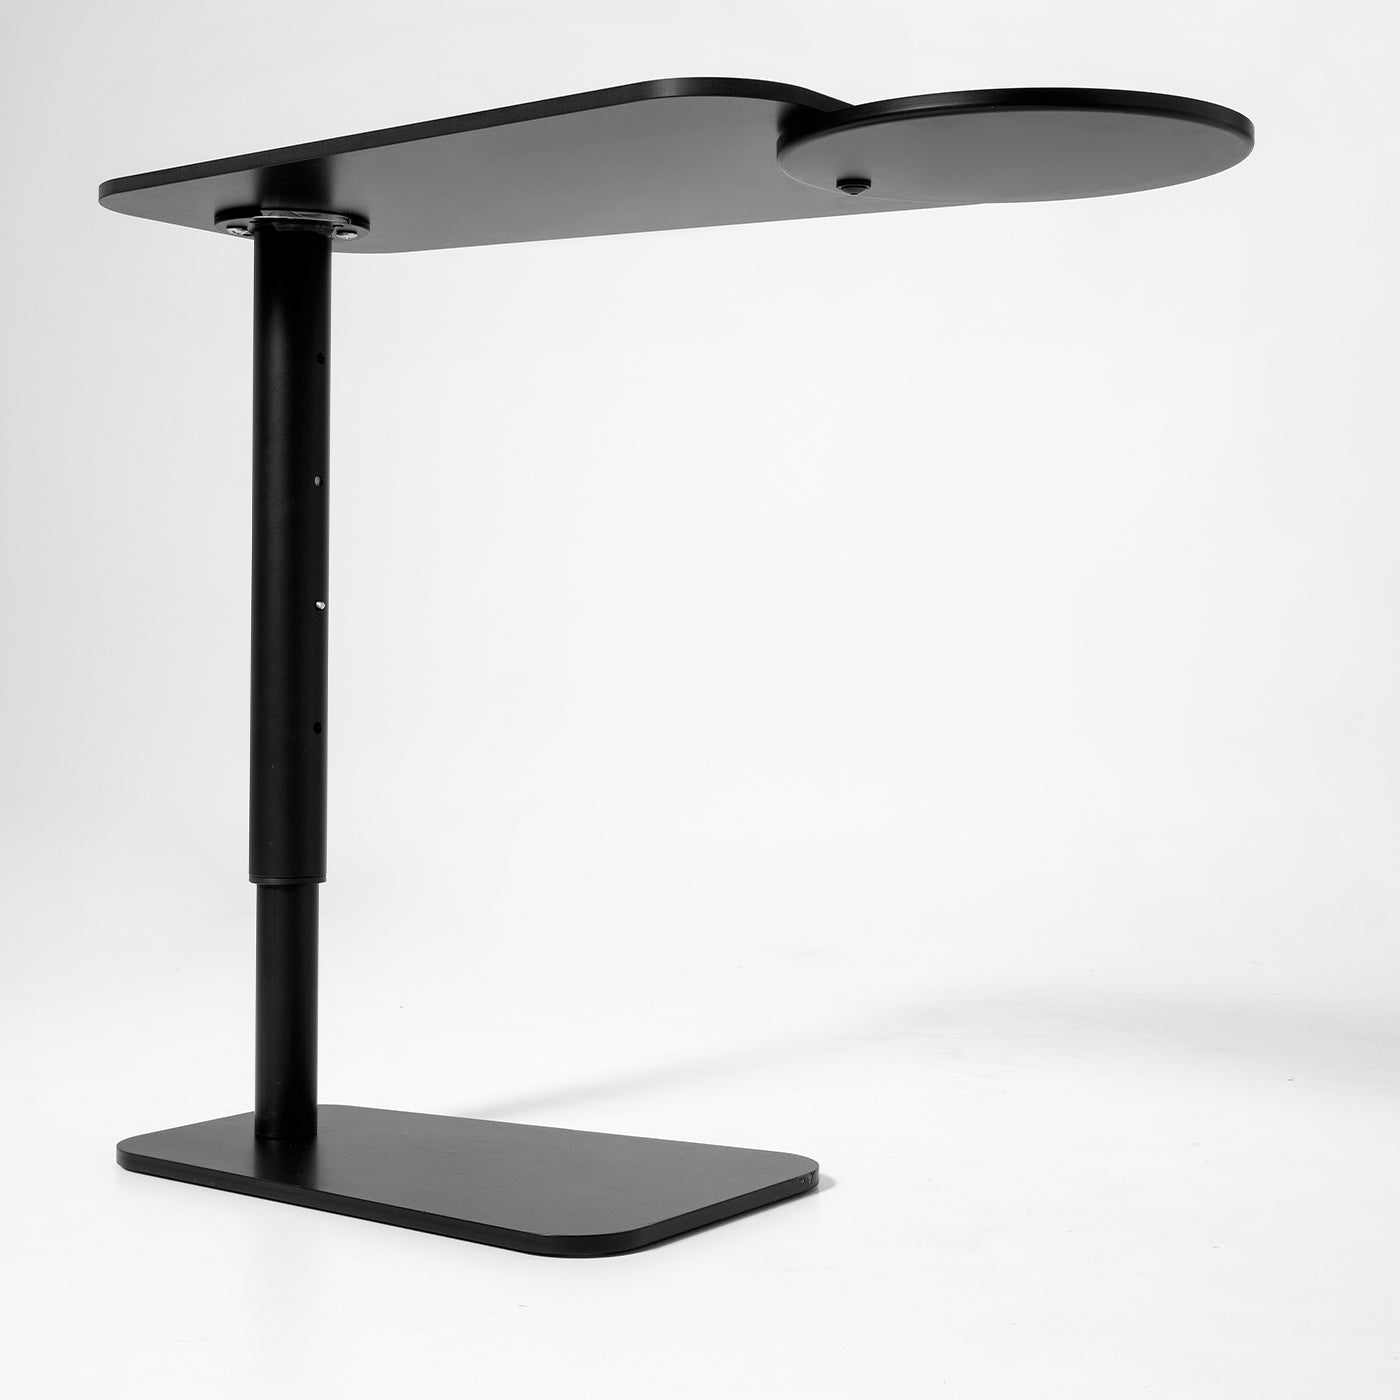 0130 Jens Black Side Table by Massimo Broglio - Alternative view 1